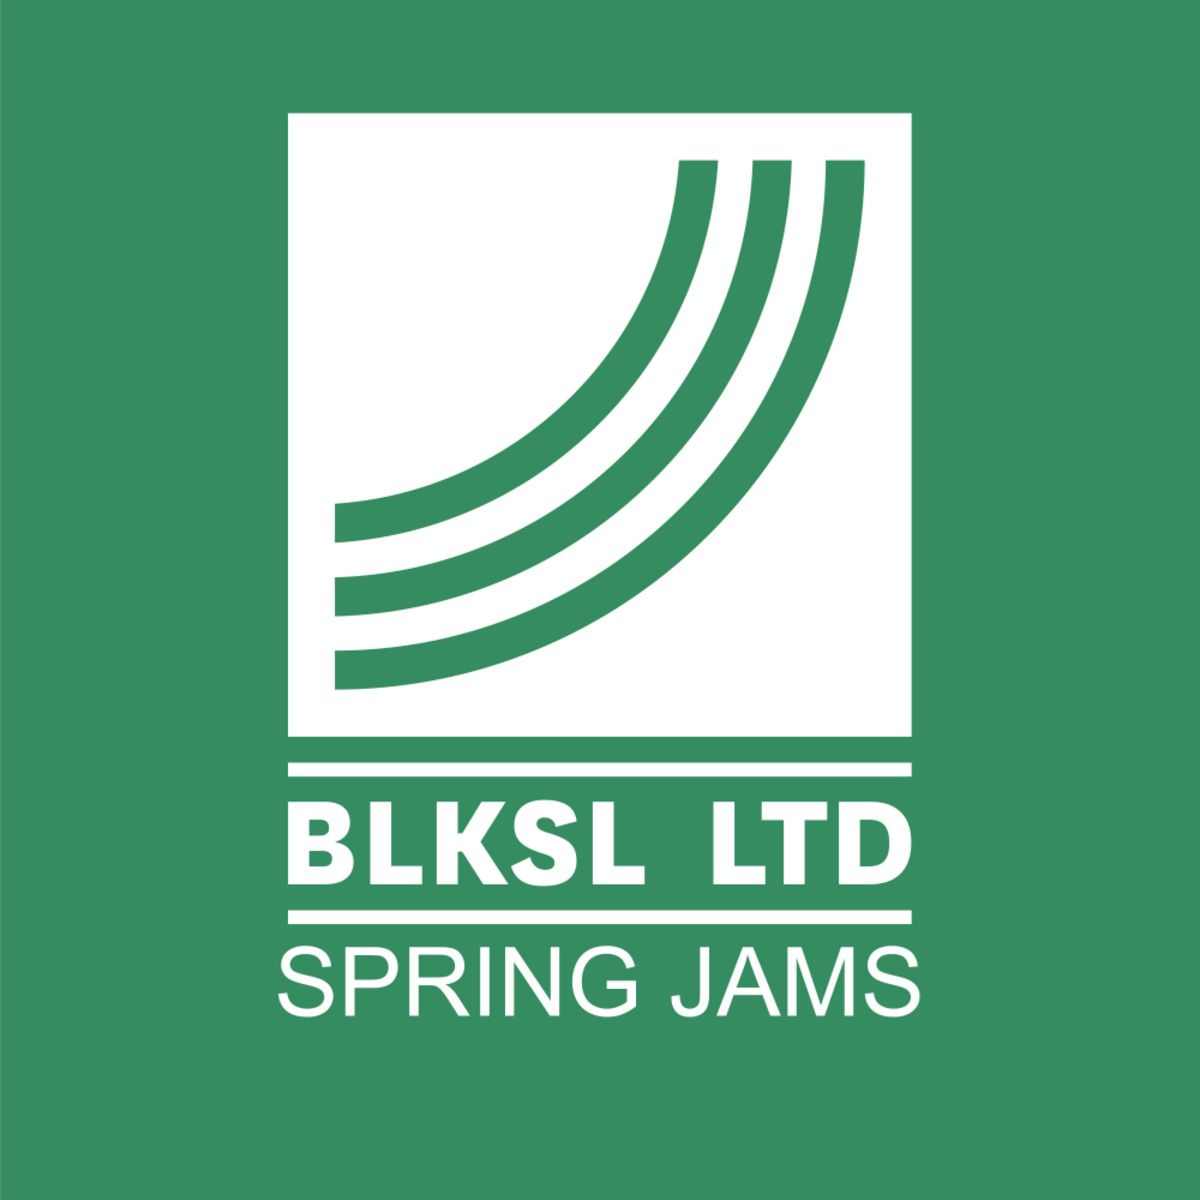 Paul Orwin - Spring Jams / BLKSL LTD